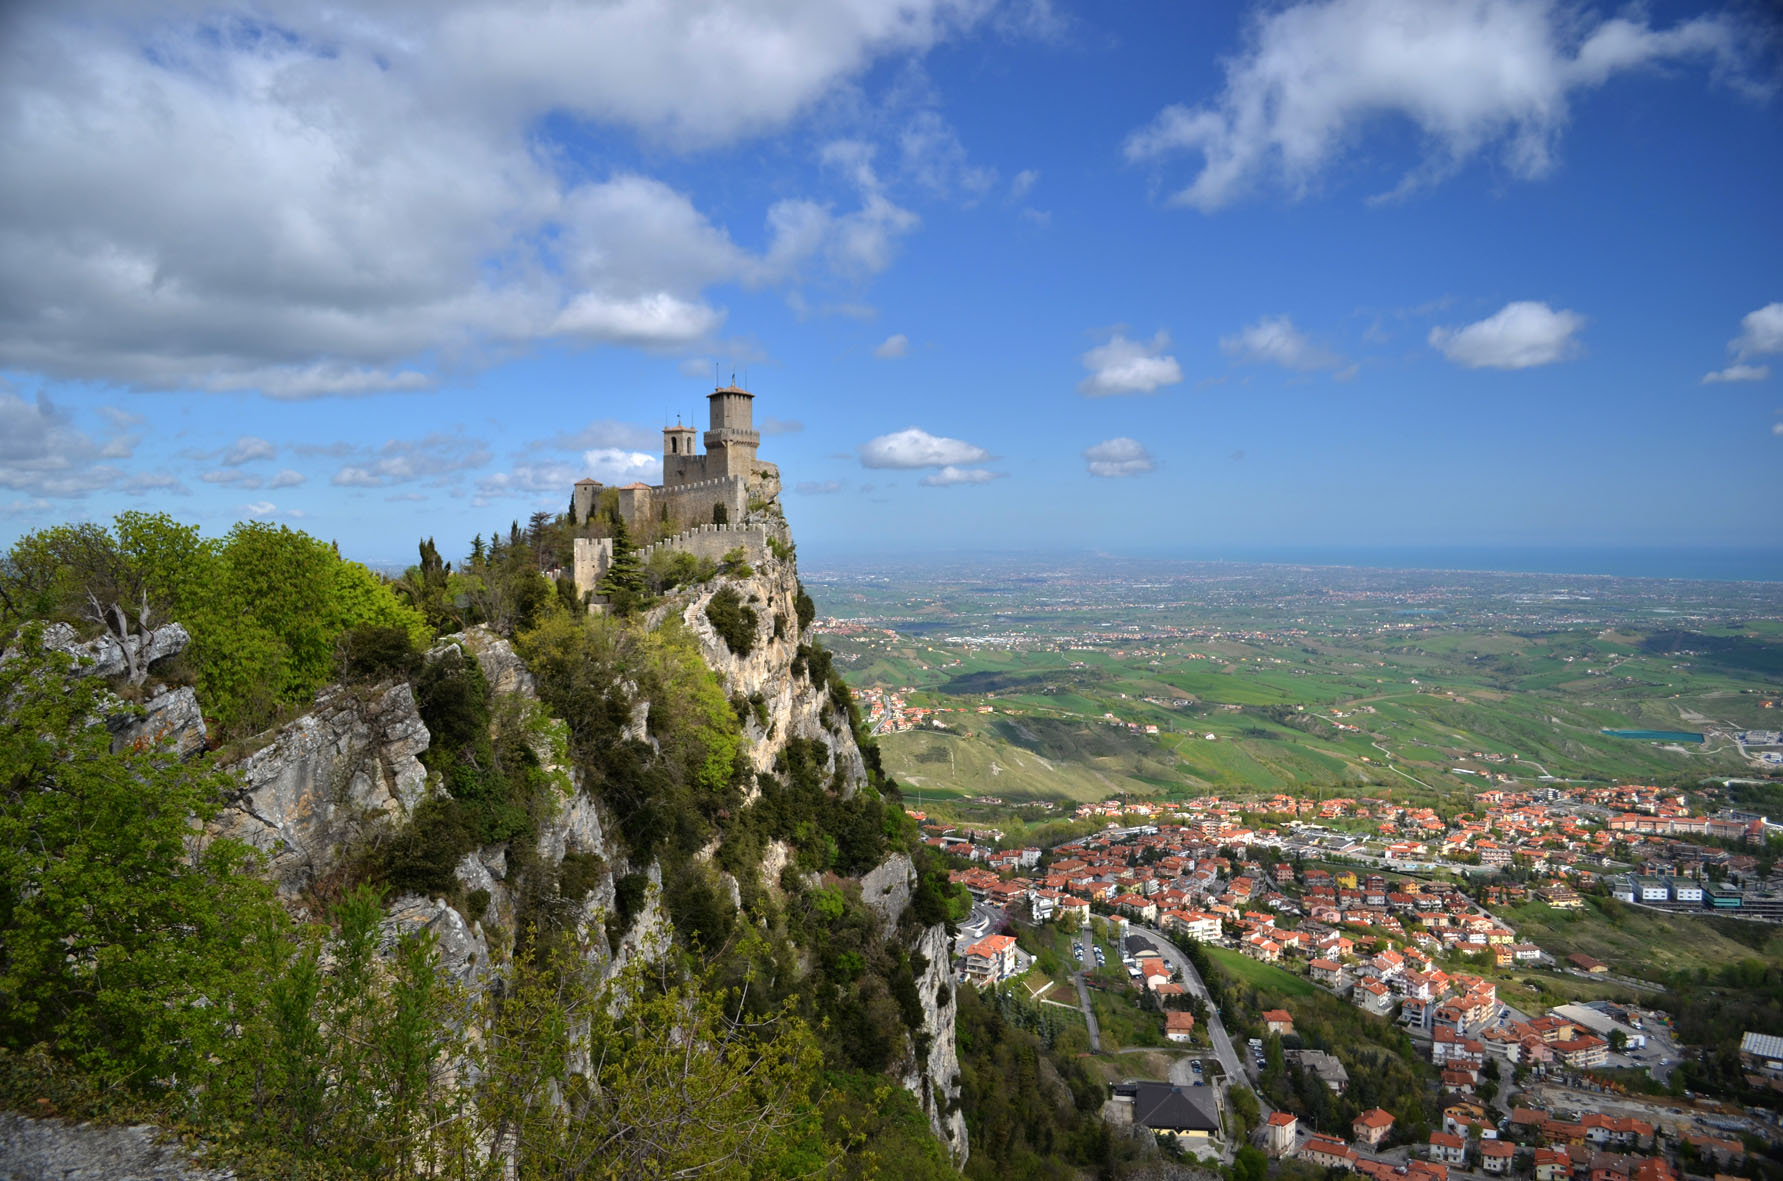 Weekend events in San Marino